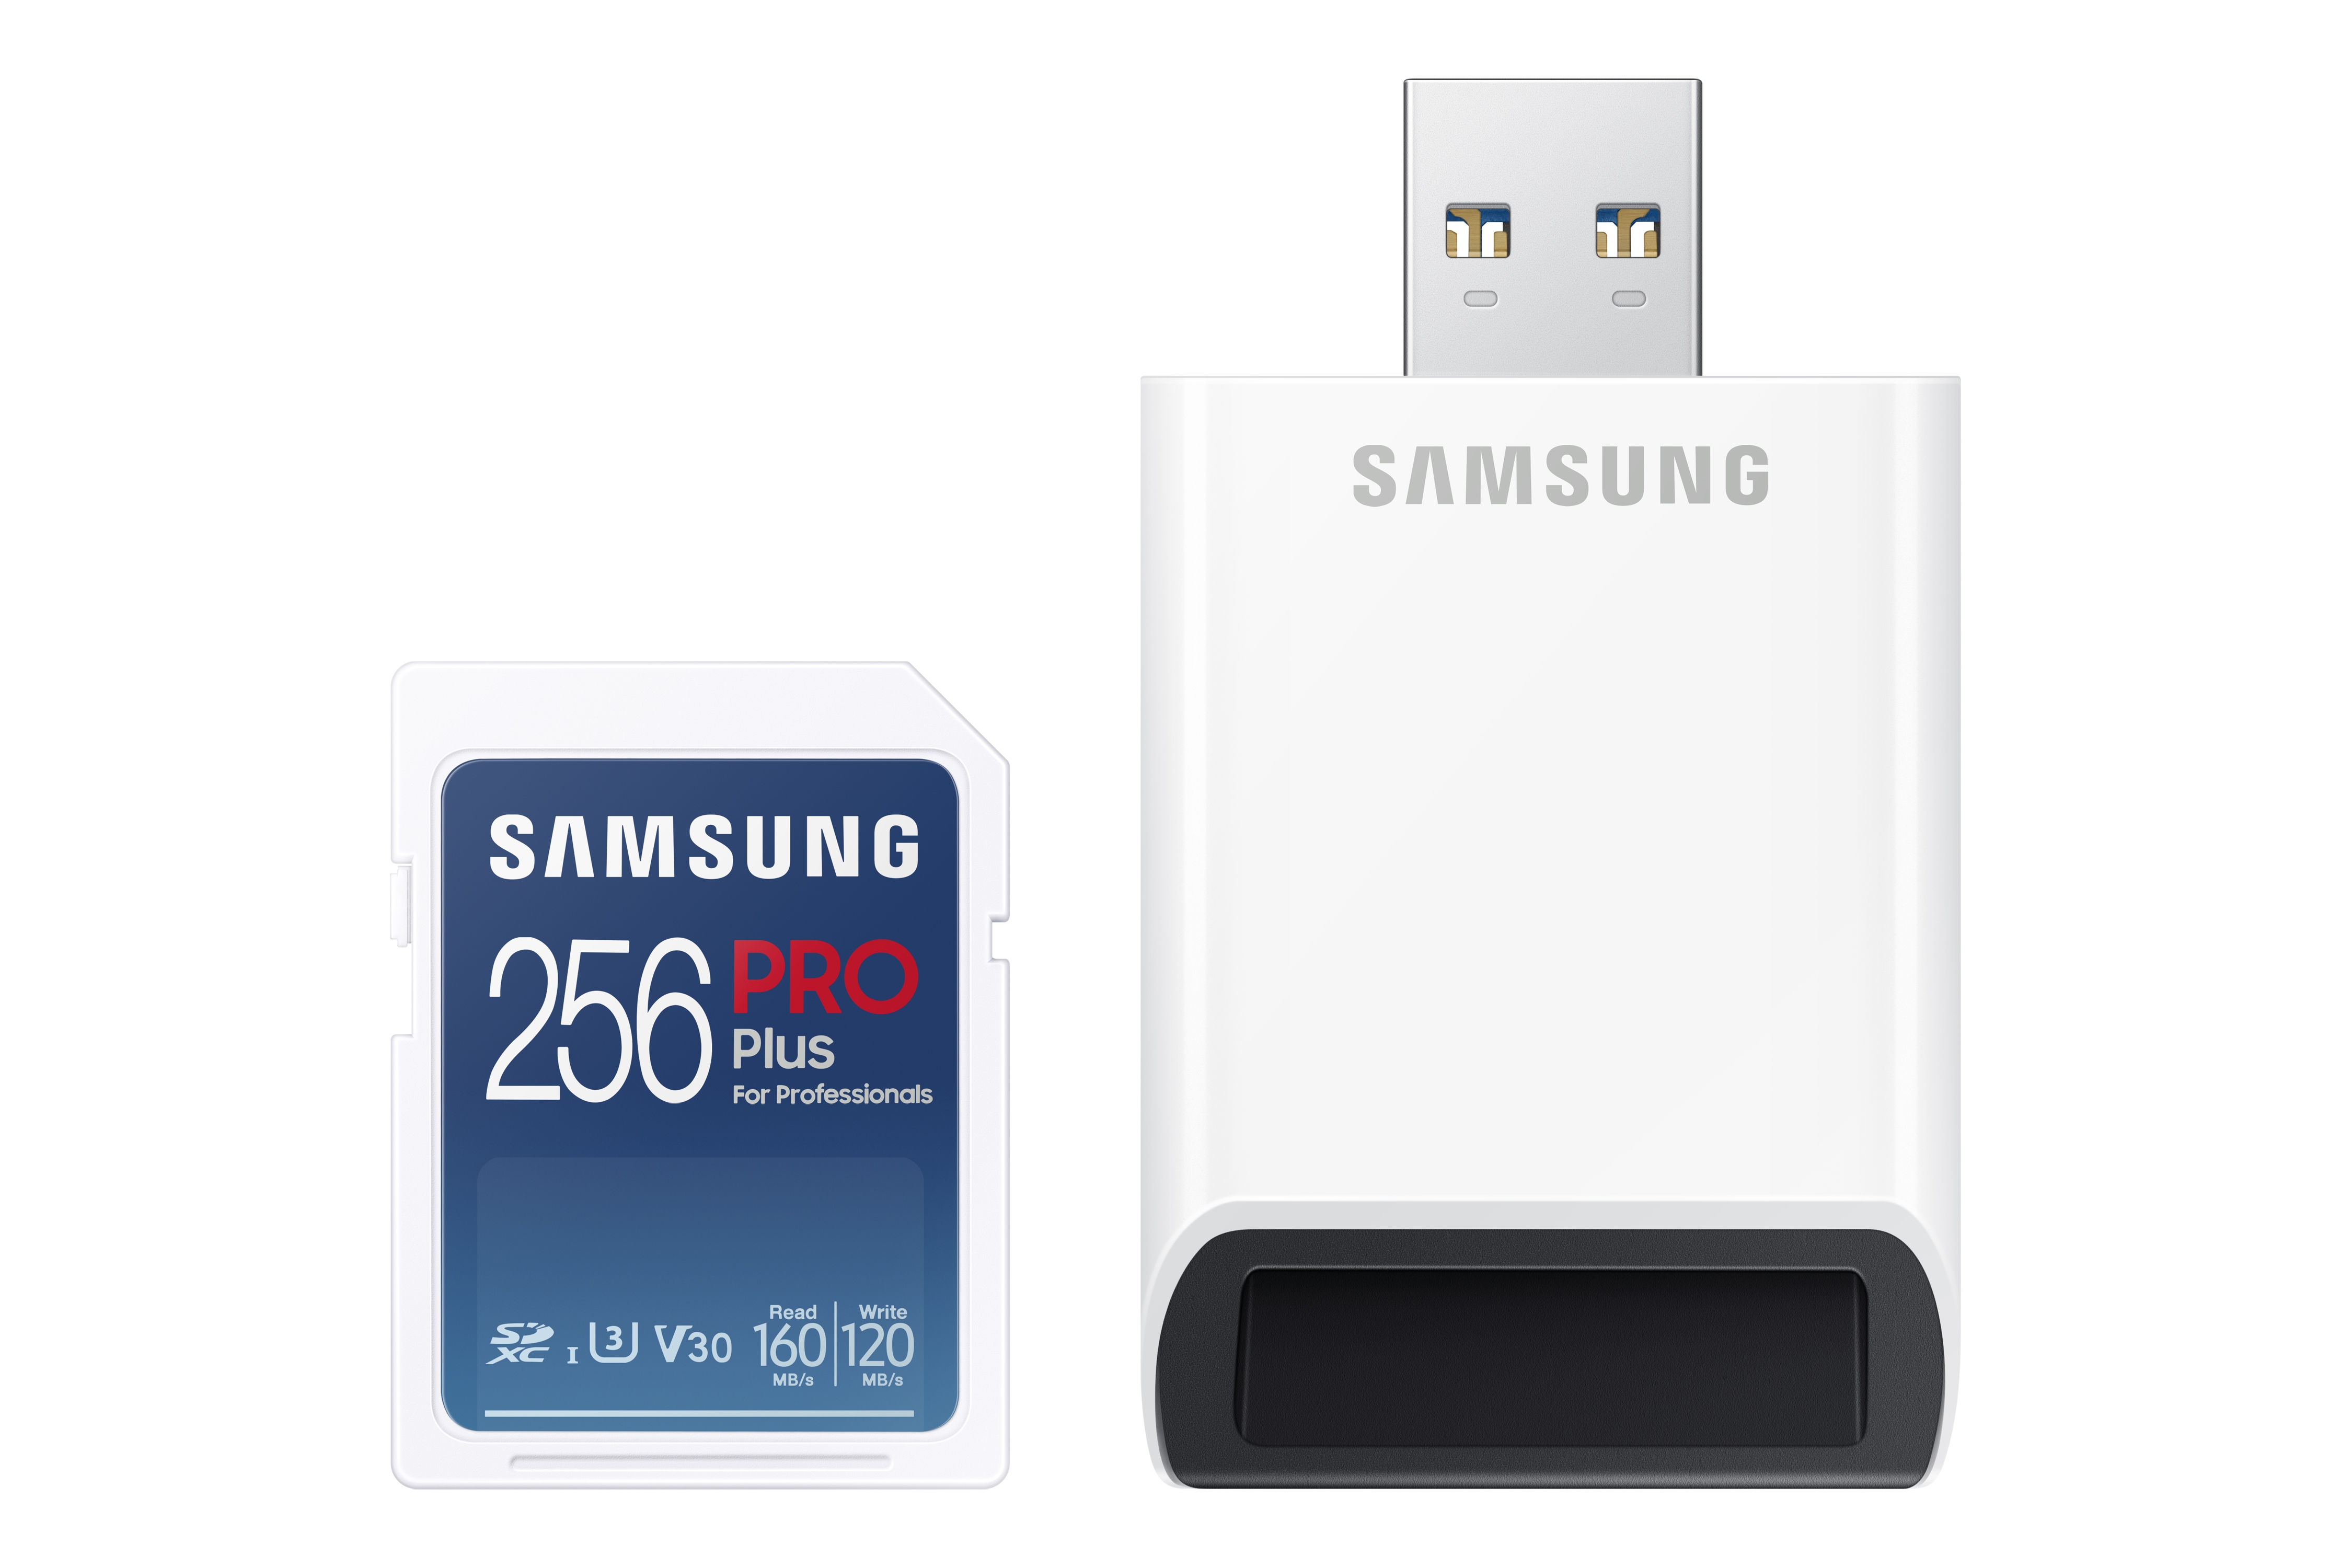 Secure Digital Computer data storage Flash Memory Cards, sd card, logo,  data Storage, brand png